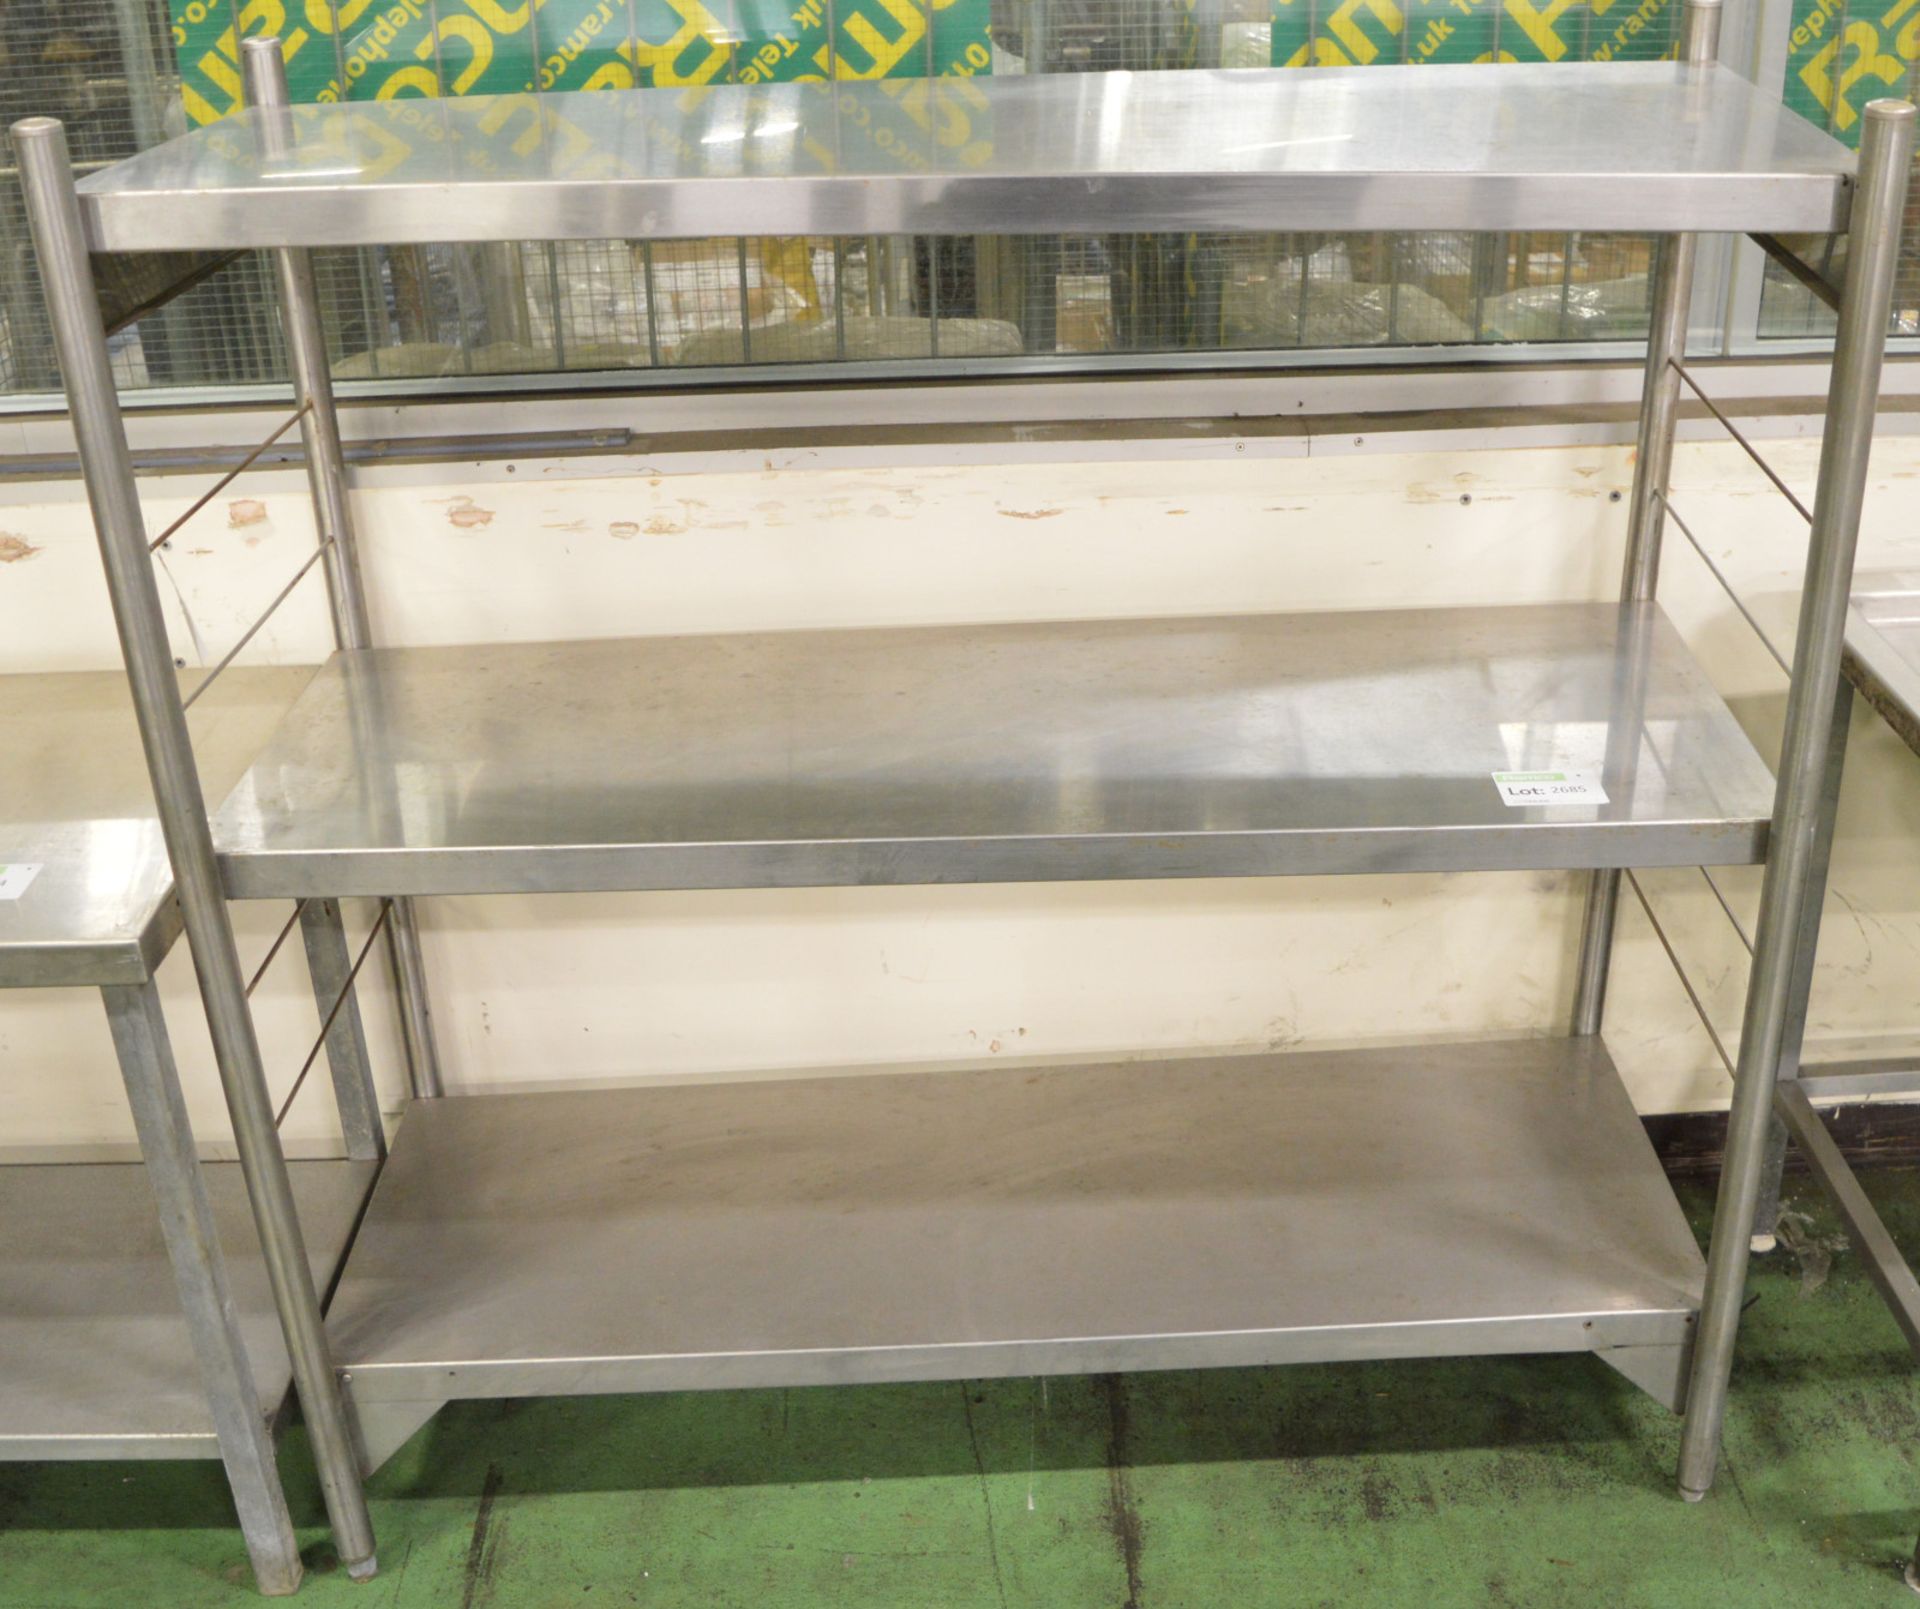 Stainless Steel Shelves 1490mm x 510mm x 1460mm high.